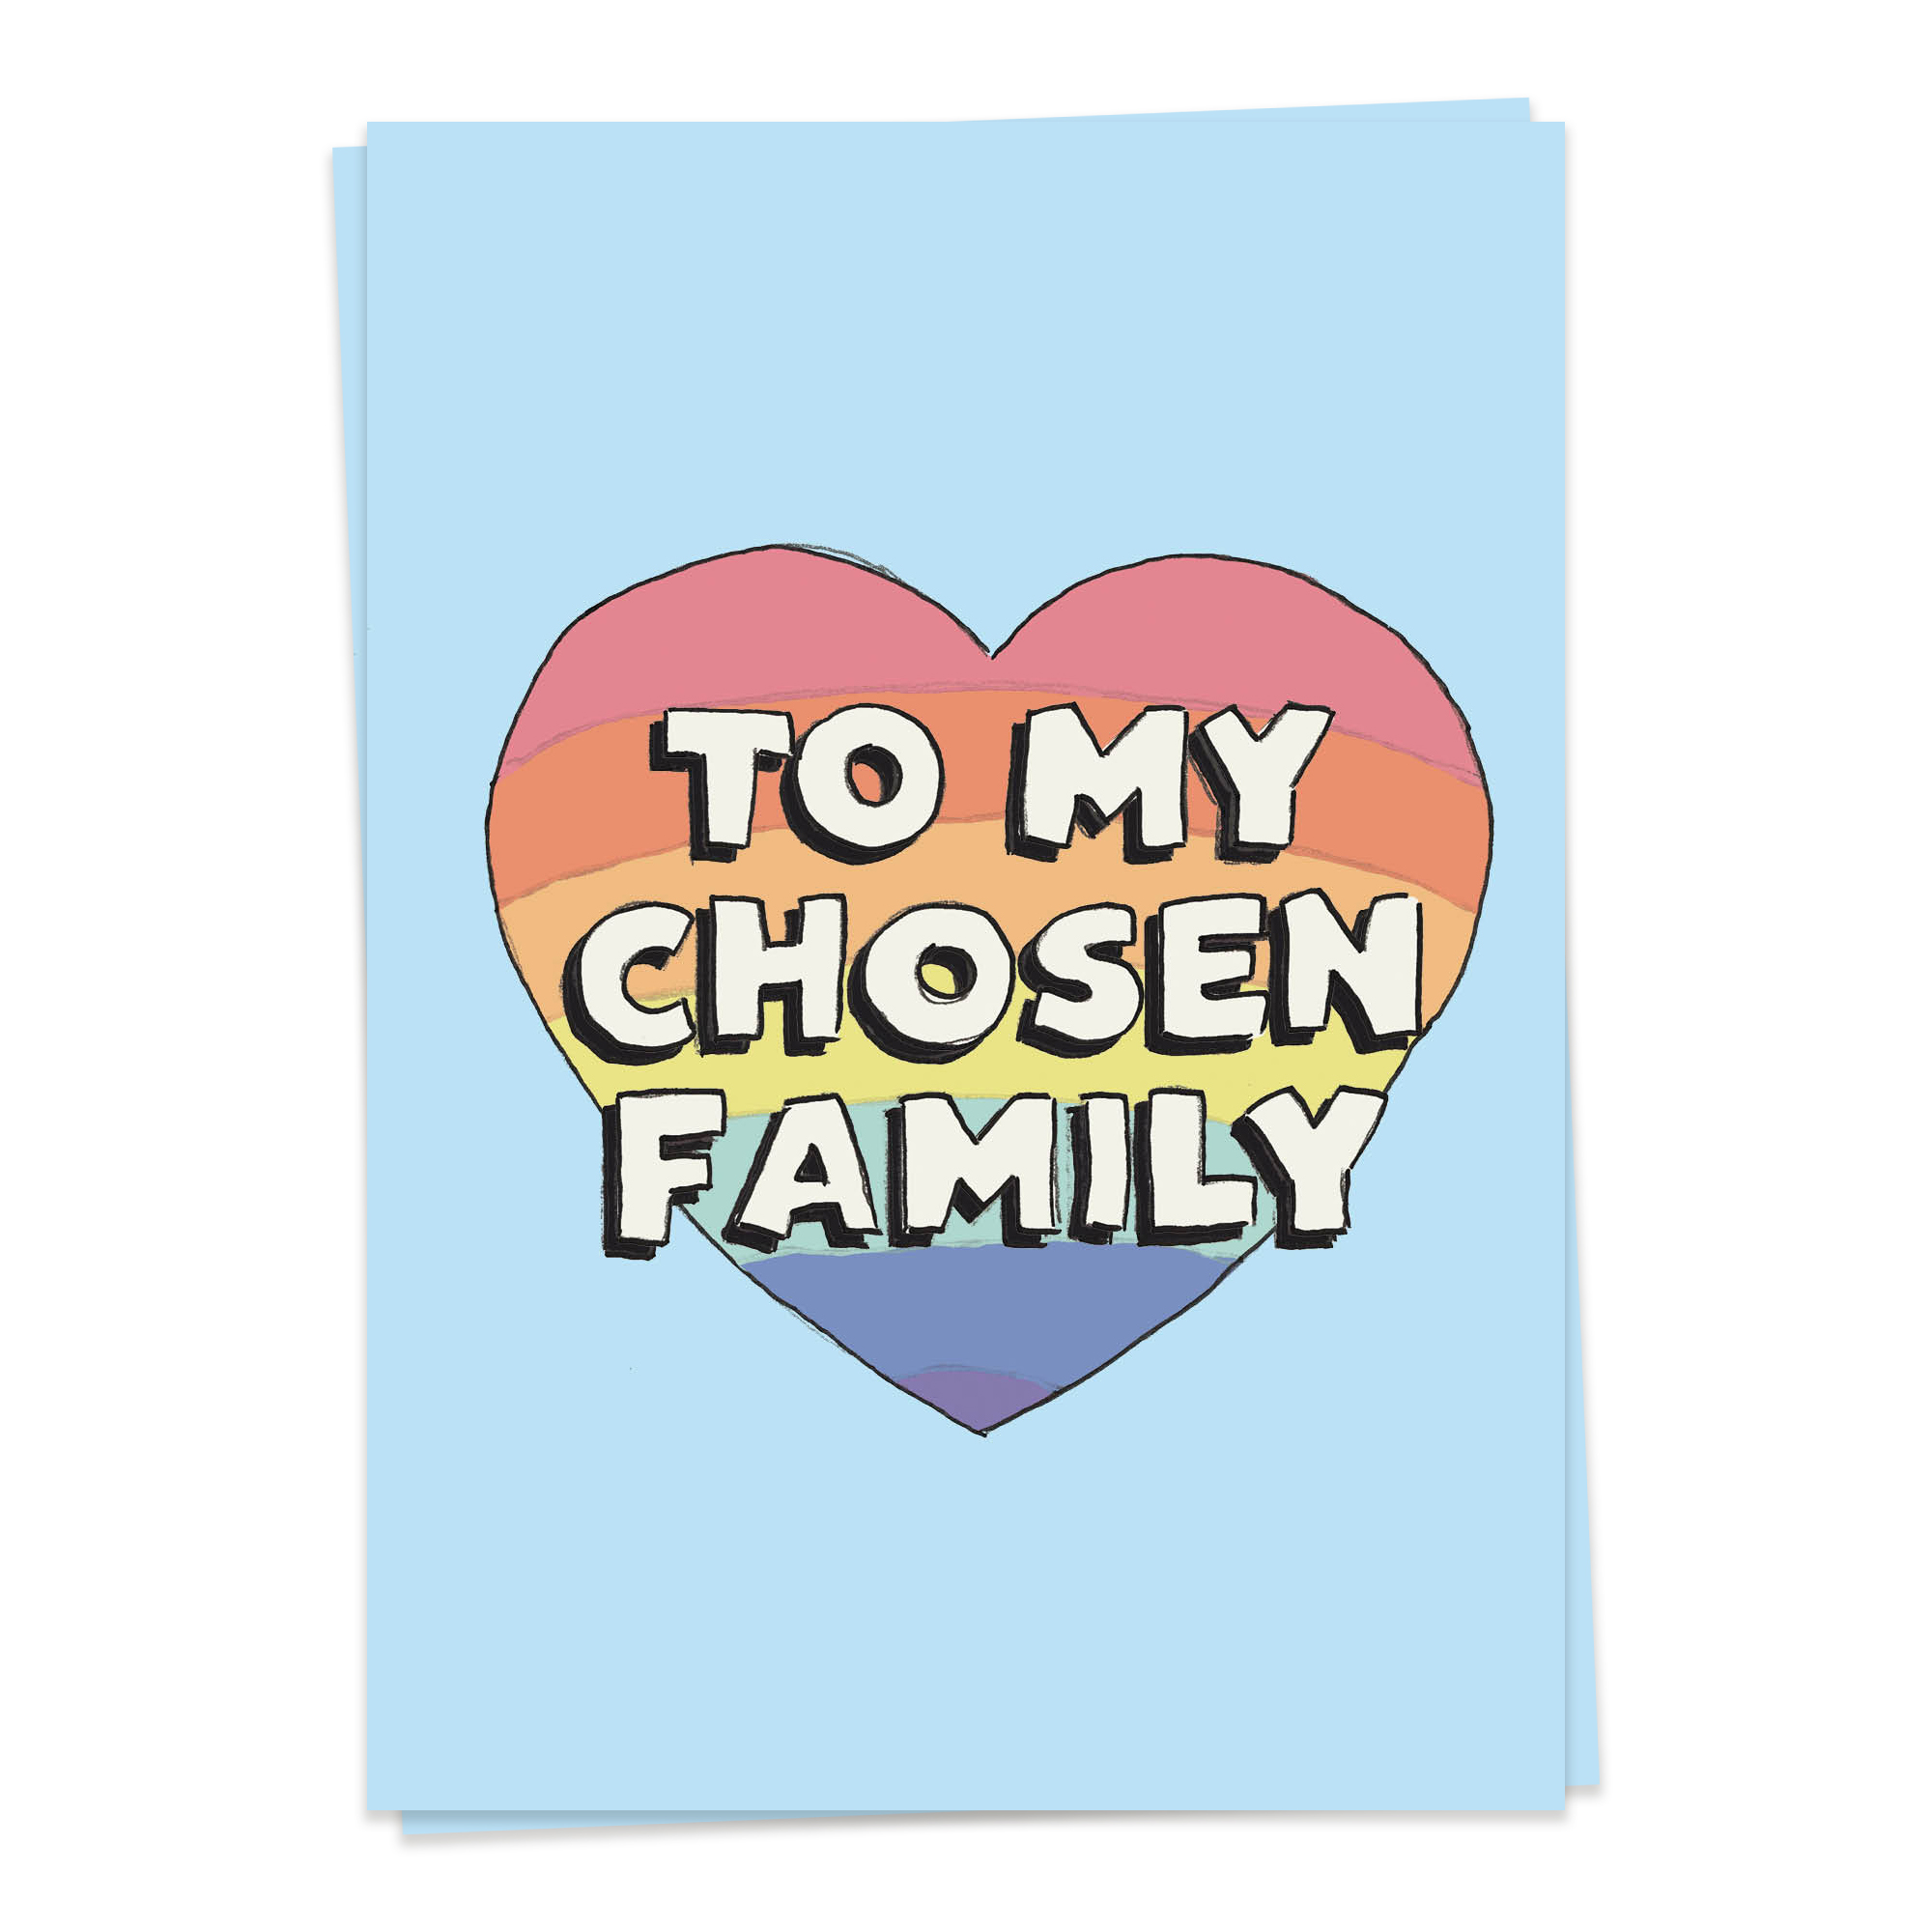 LGBTQ – Chosen family